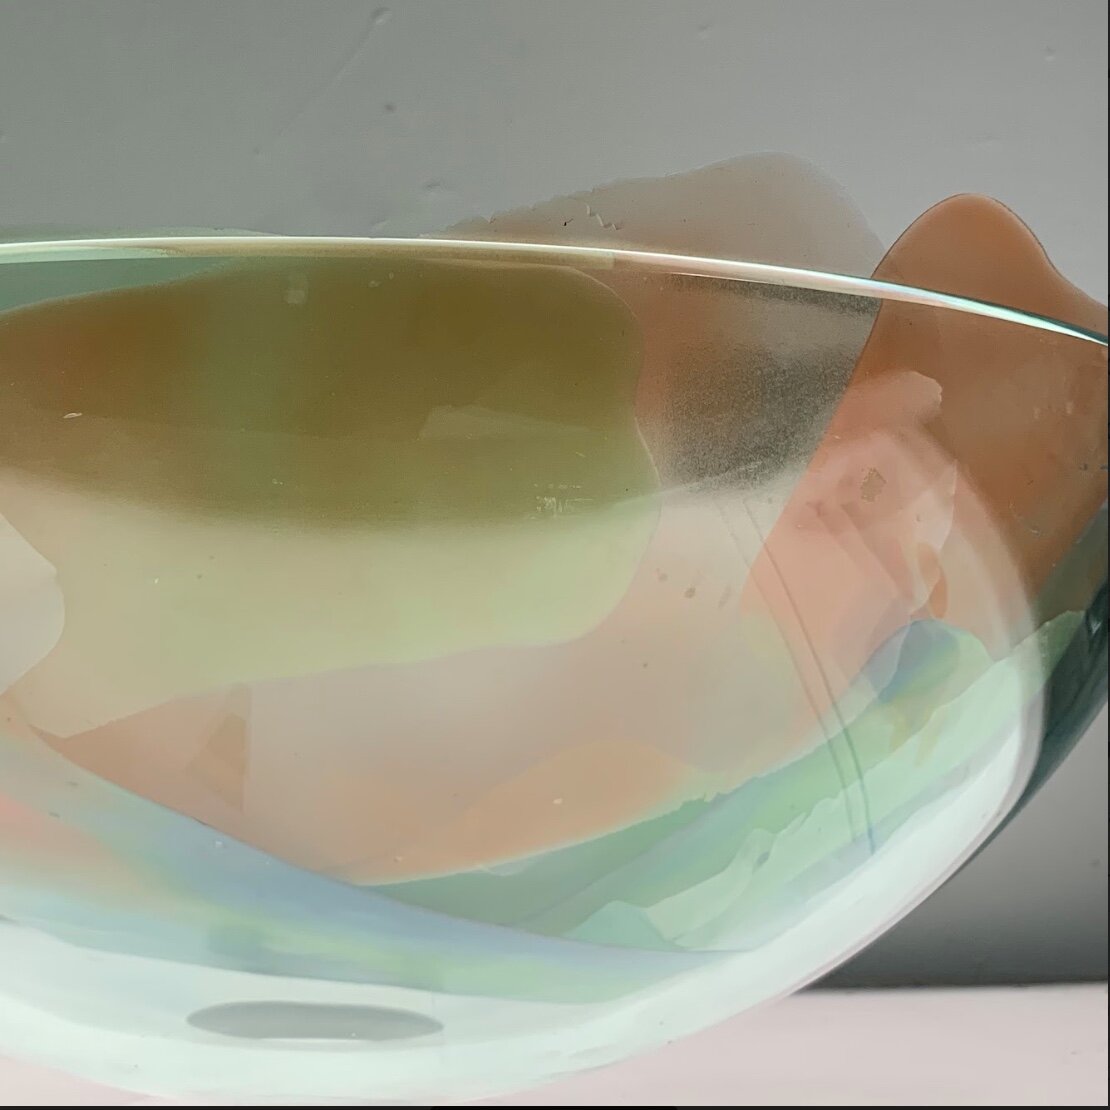 Aisha Faria, Plasticália, 2019. Acrylic, glass sculpture, installation.